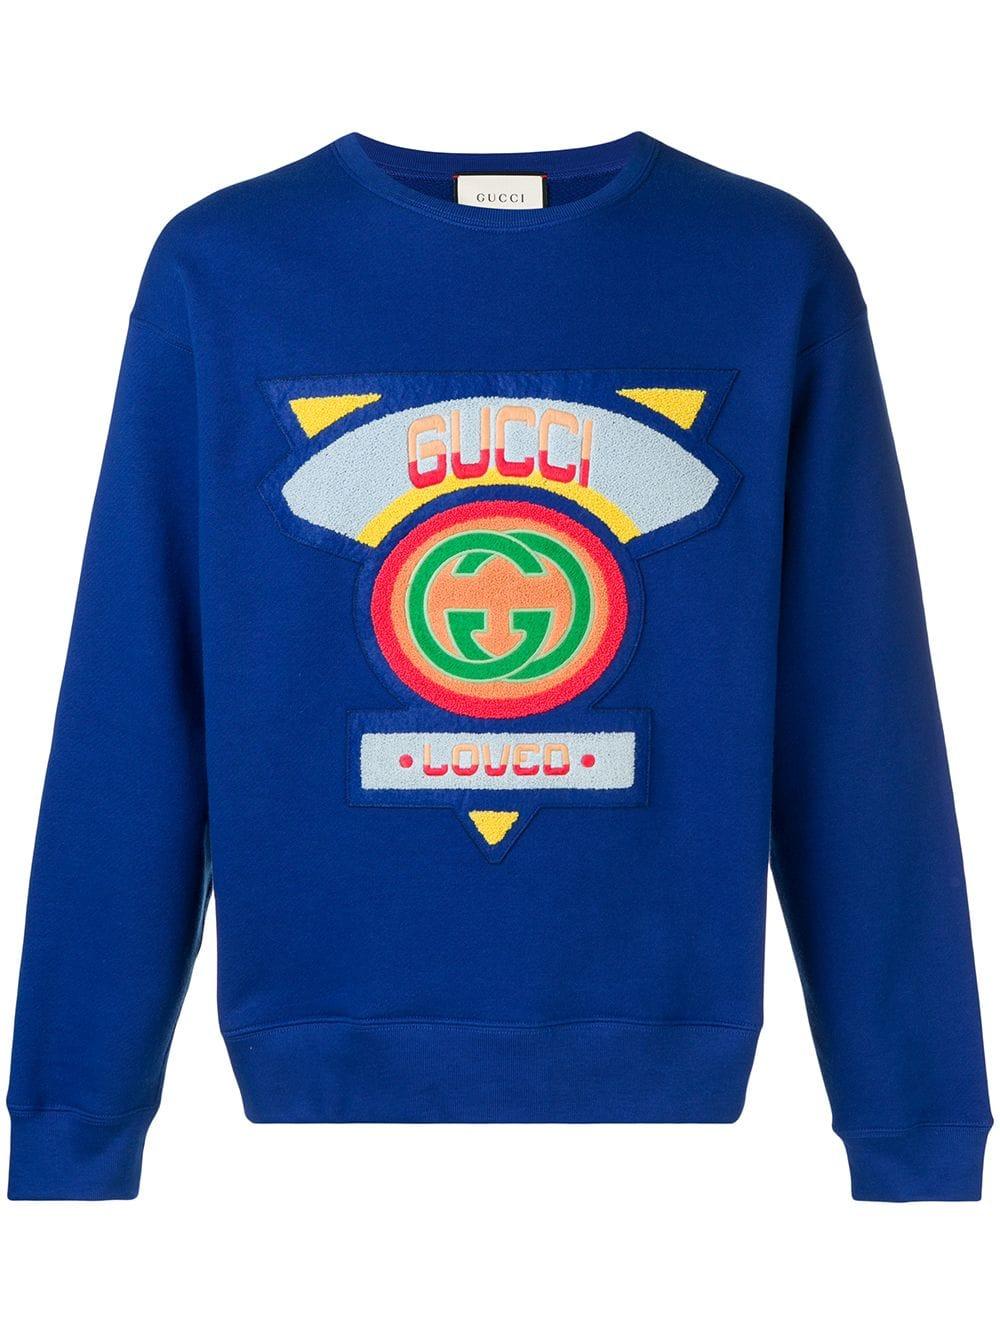 Gucci '80s Logo Patch Sweatshirt - Blue 